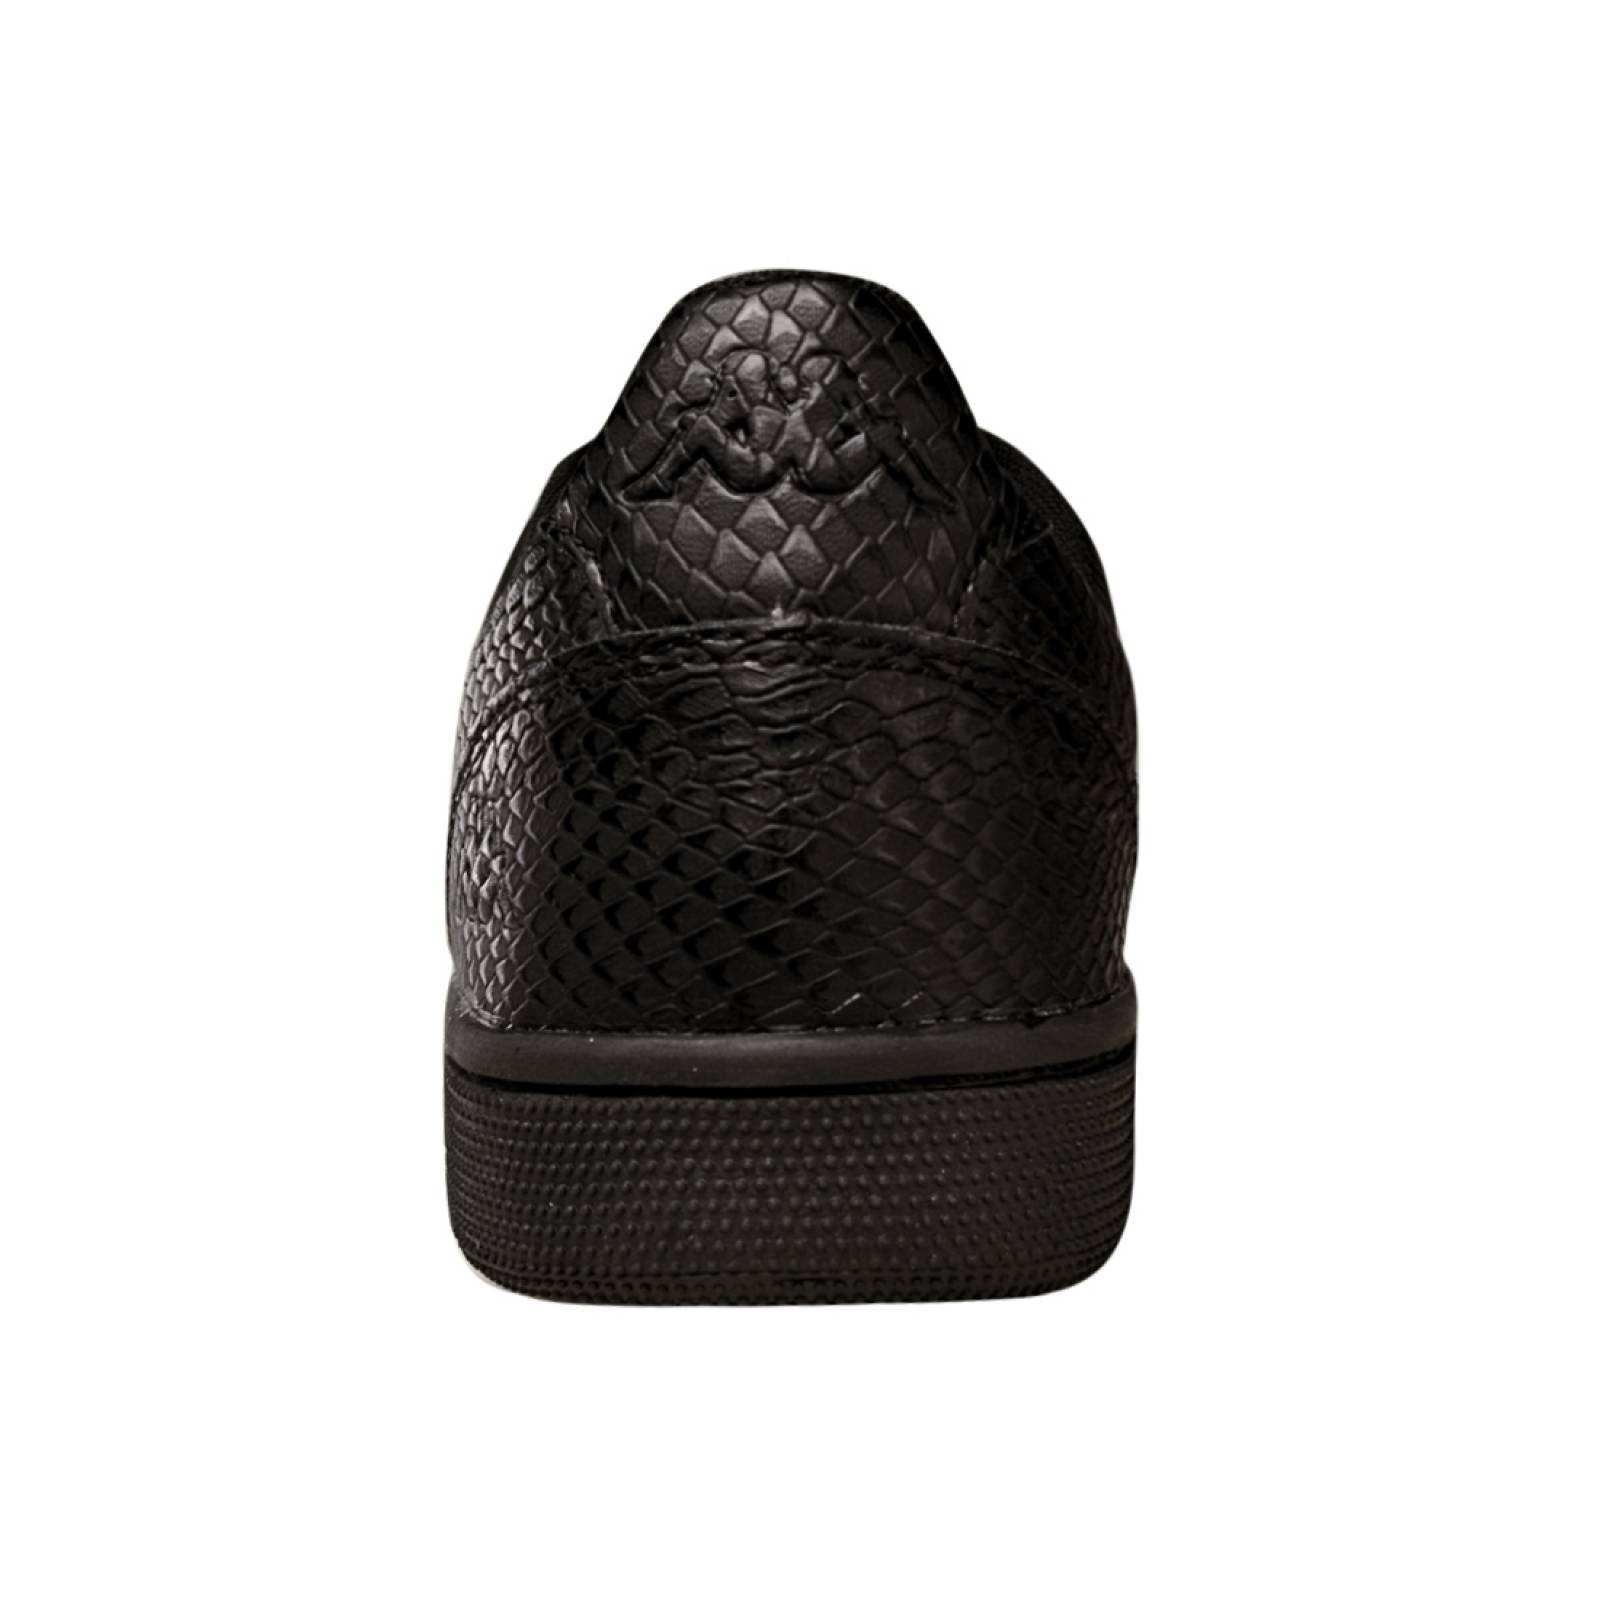 Zapato Tenis Casual Hombre Caballero Moderno Negro Kappa